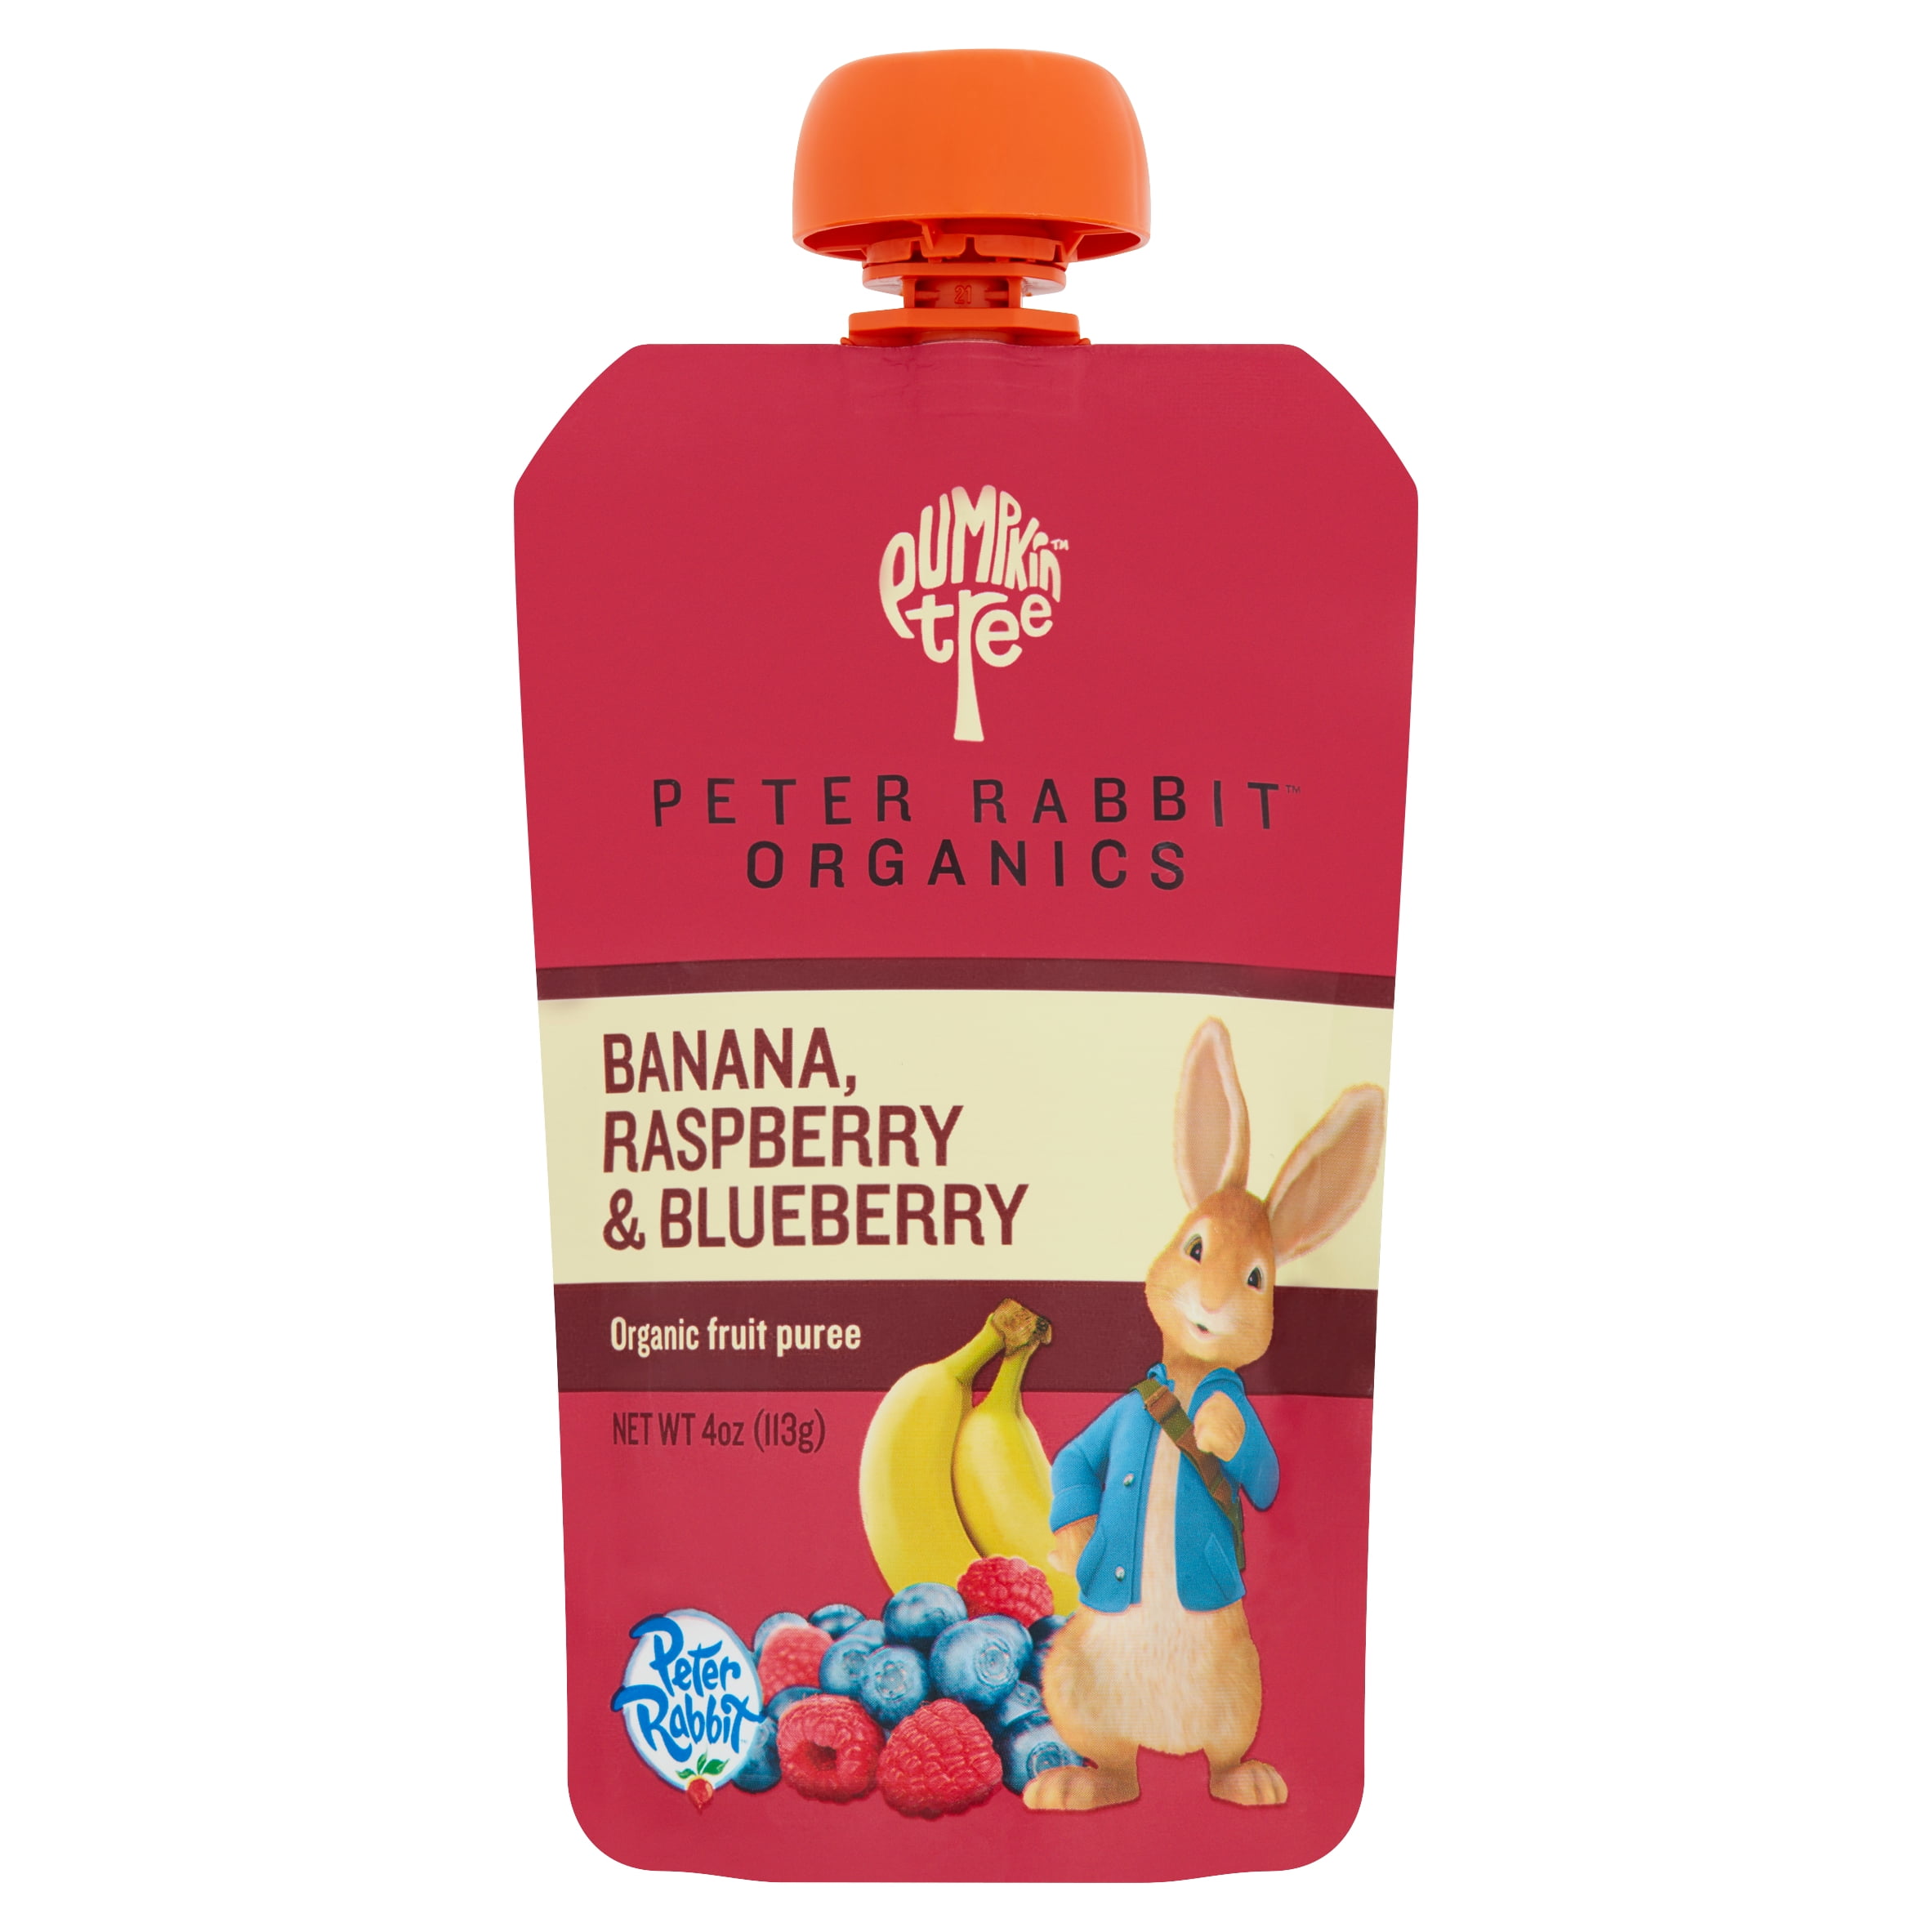 Peter Rabbit Organics Banana, Raspberry & Blueberry Organic Fruit Puree, 4 oz